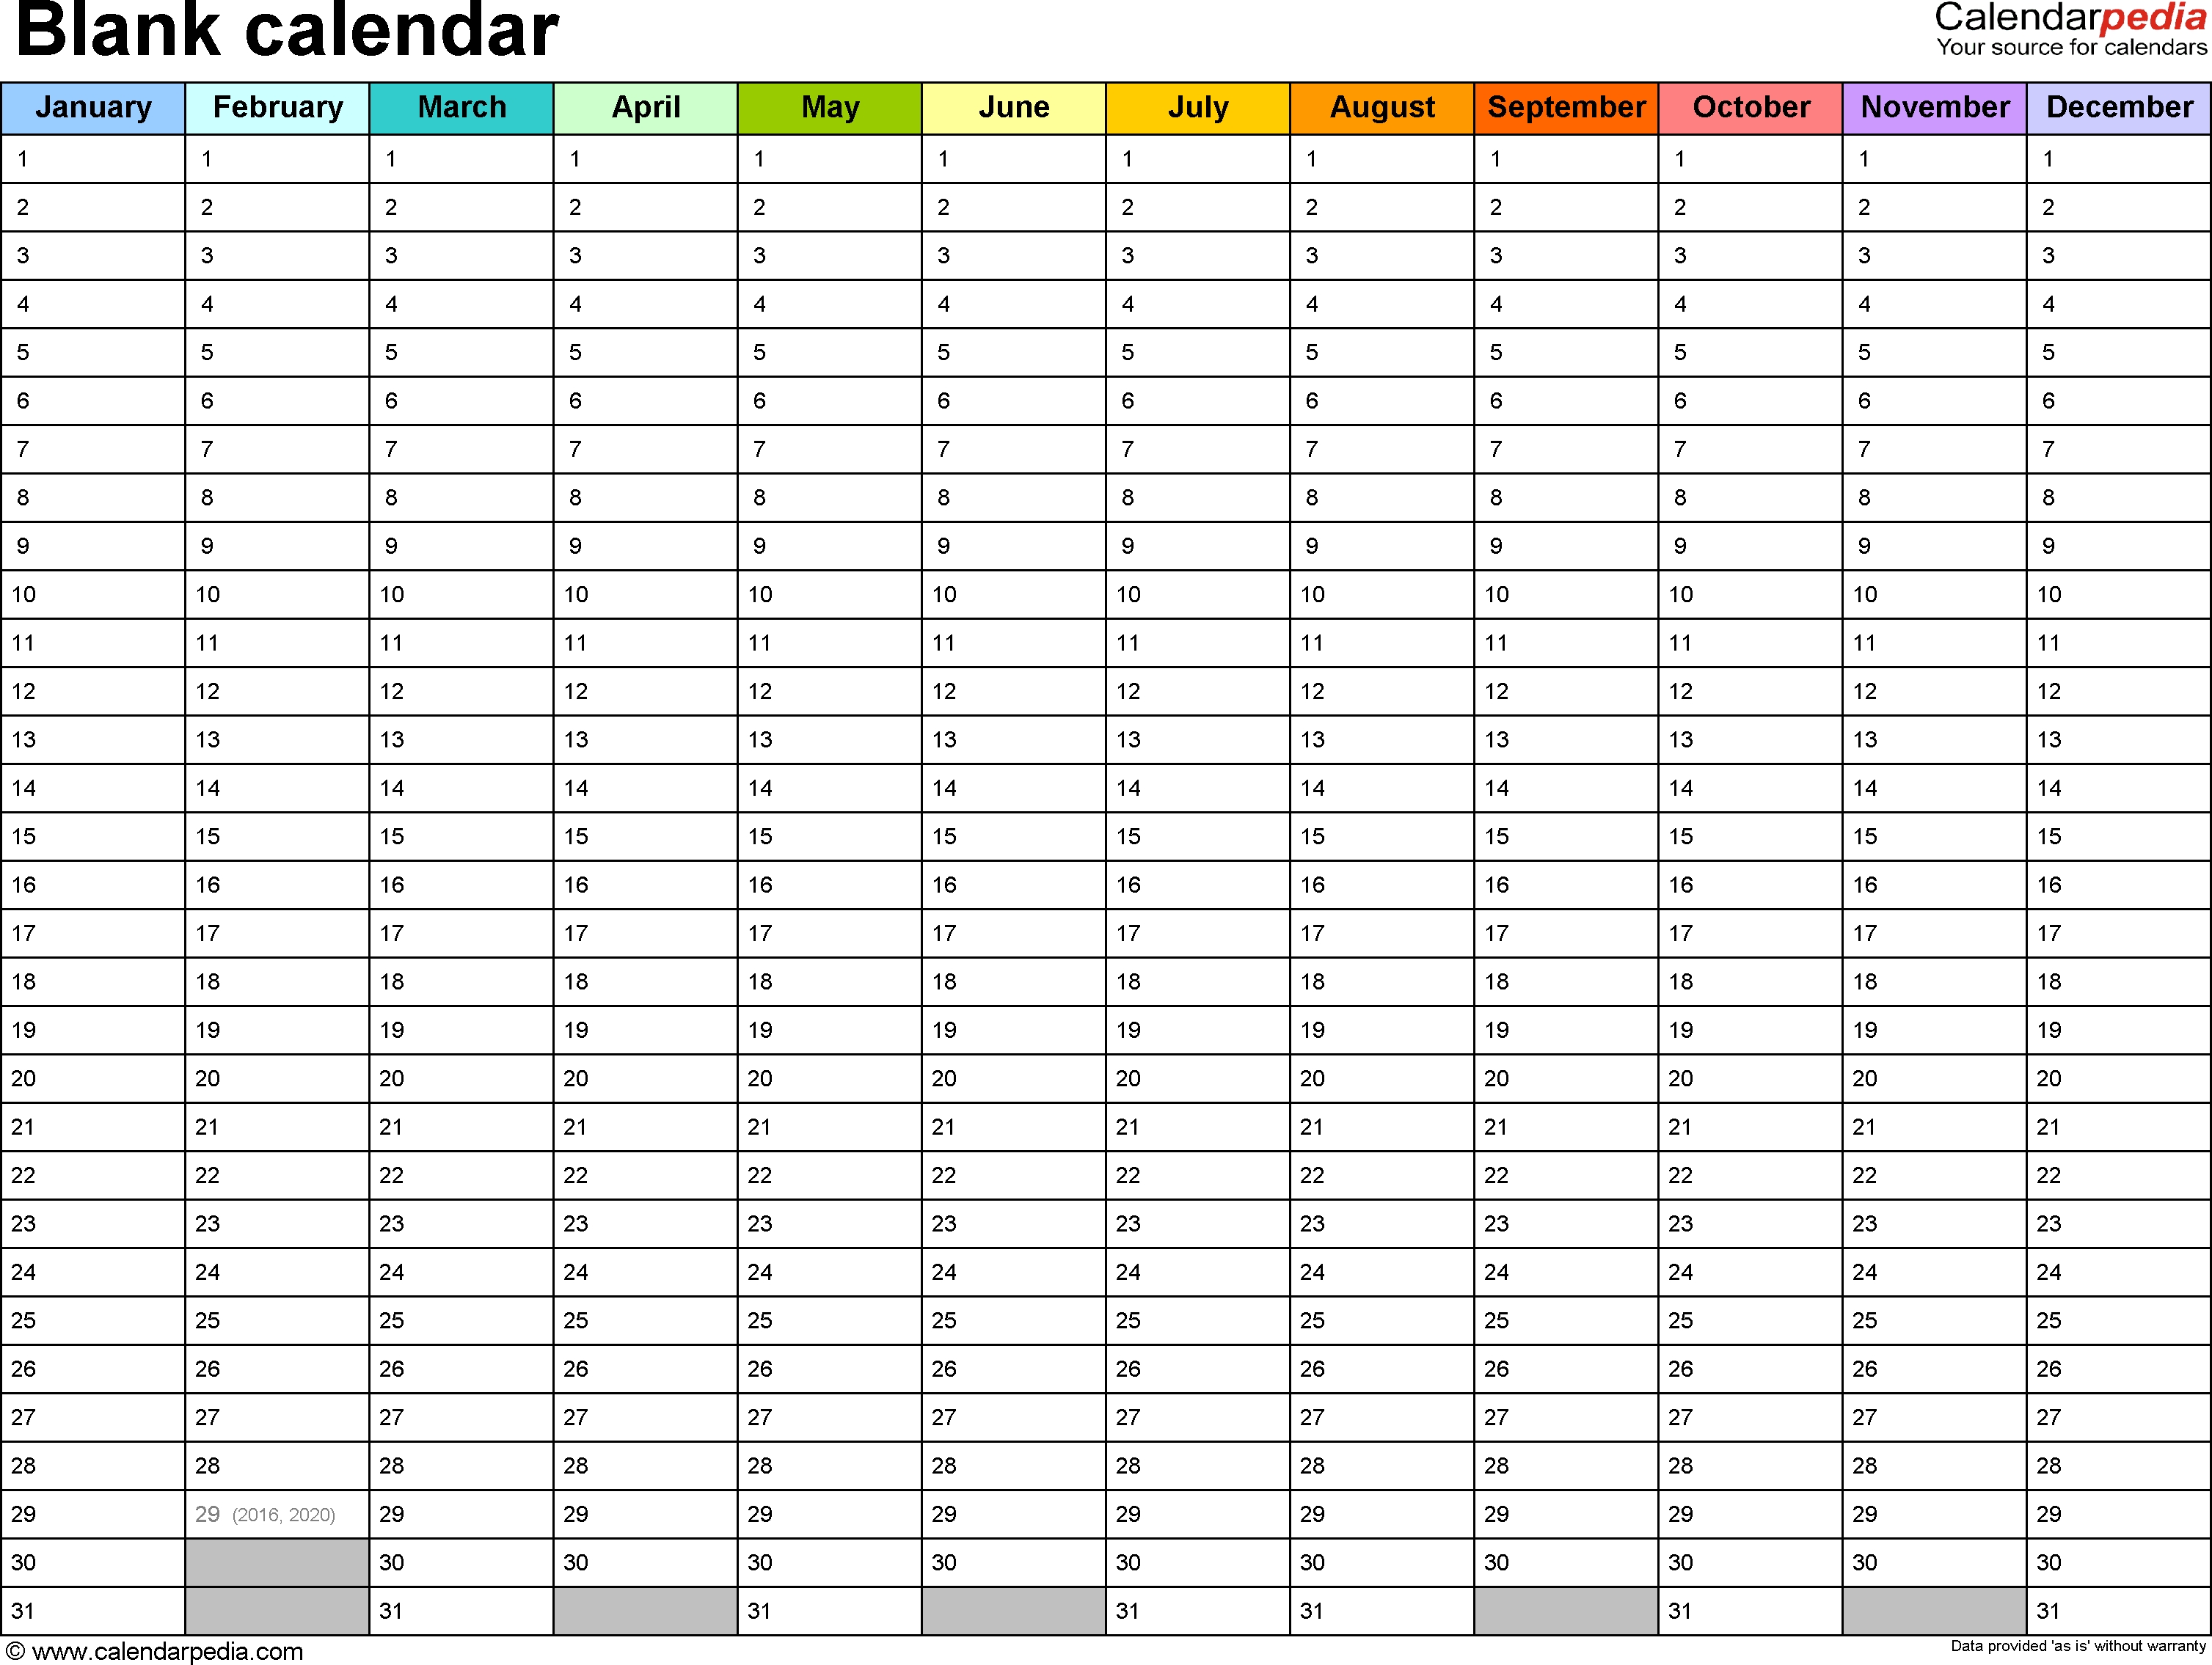 Blank Calendar - 9 Free Printable Microsoft Word Templates within 3 Month Printable Calendar Templates